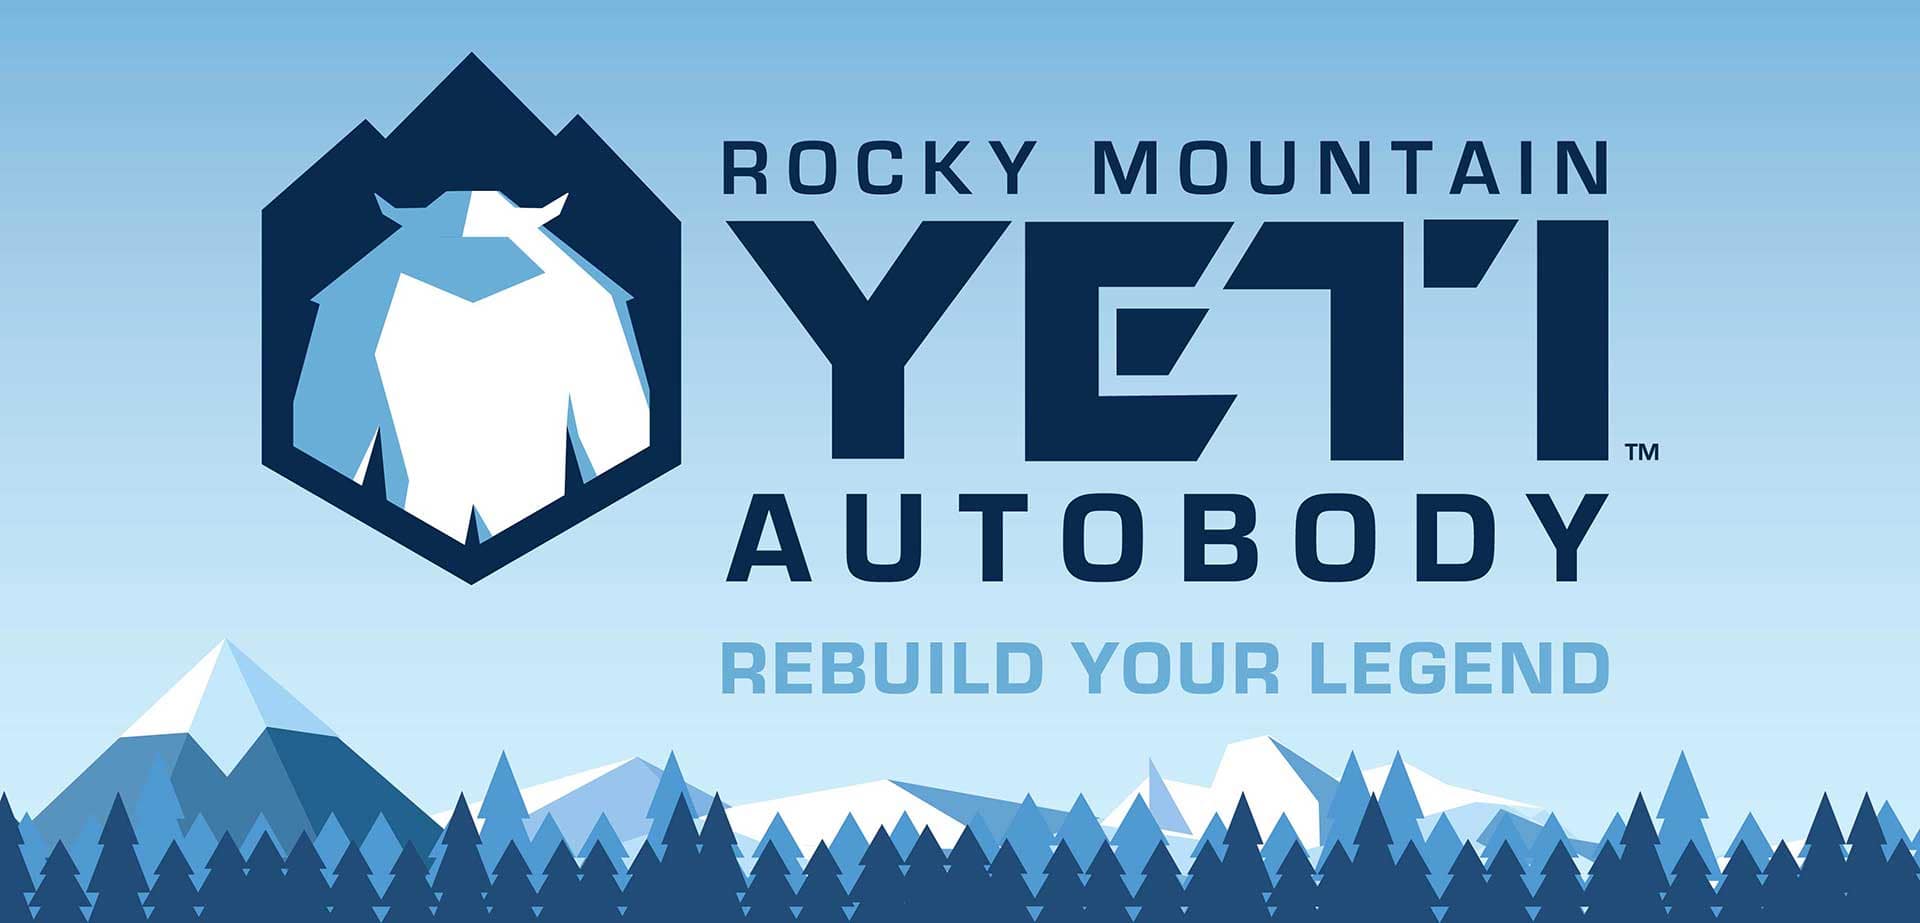 Rocky Mountain Yeti Autobody